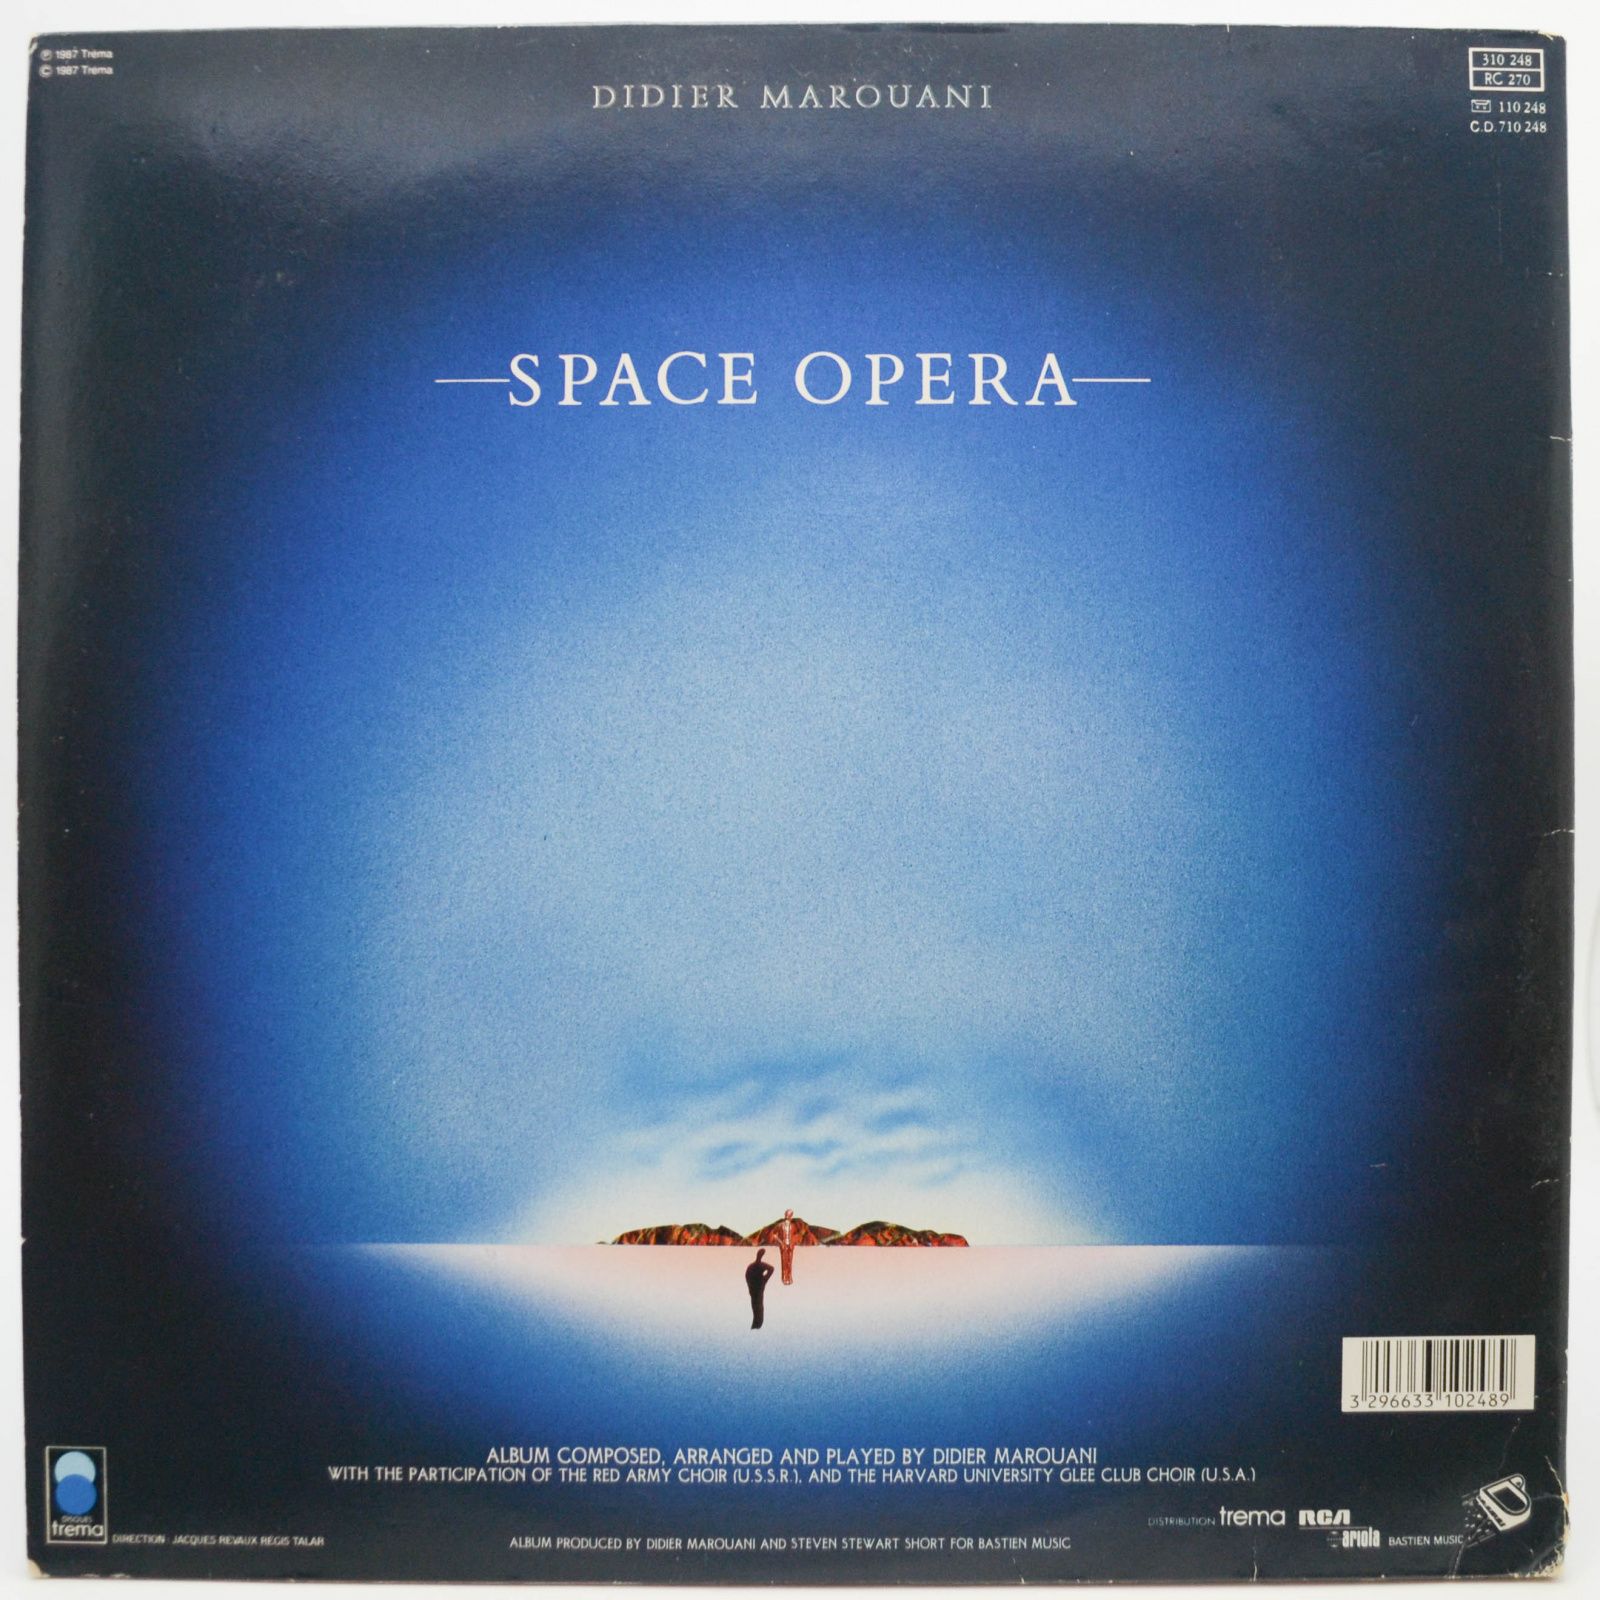 Space didier. Didier Marouani - Space Opera (1987). Пластинка Didier Marouani Космическая опера. Space(Didier Marouani) - Symphonic Space Dream 2002 год. Спейс виниловая пластинка Космическая опера.